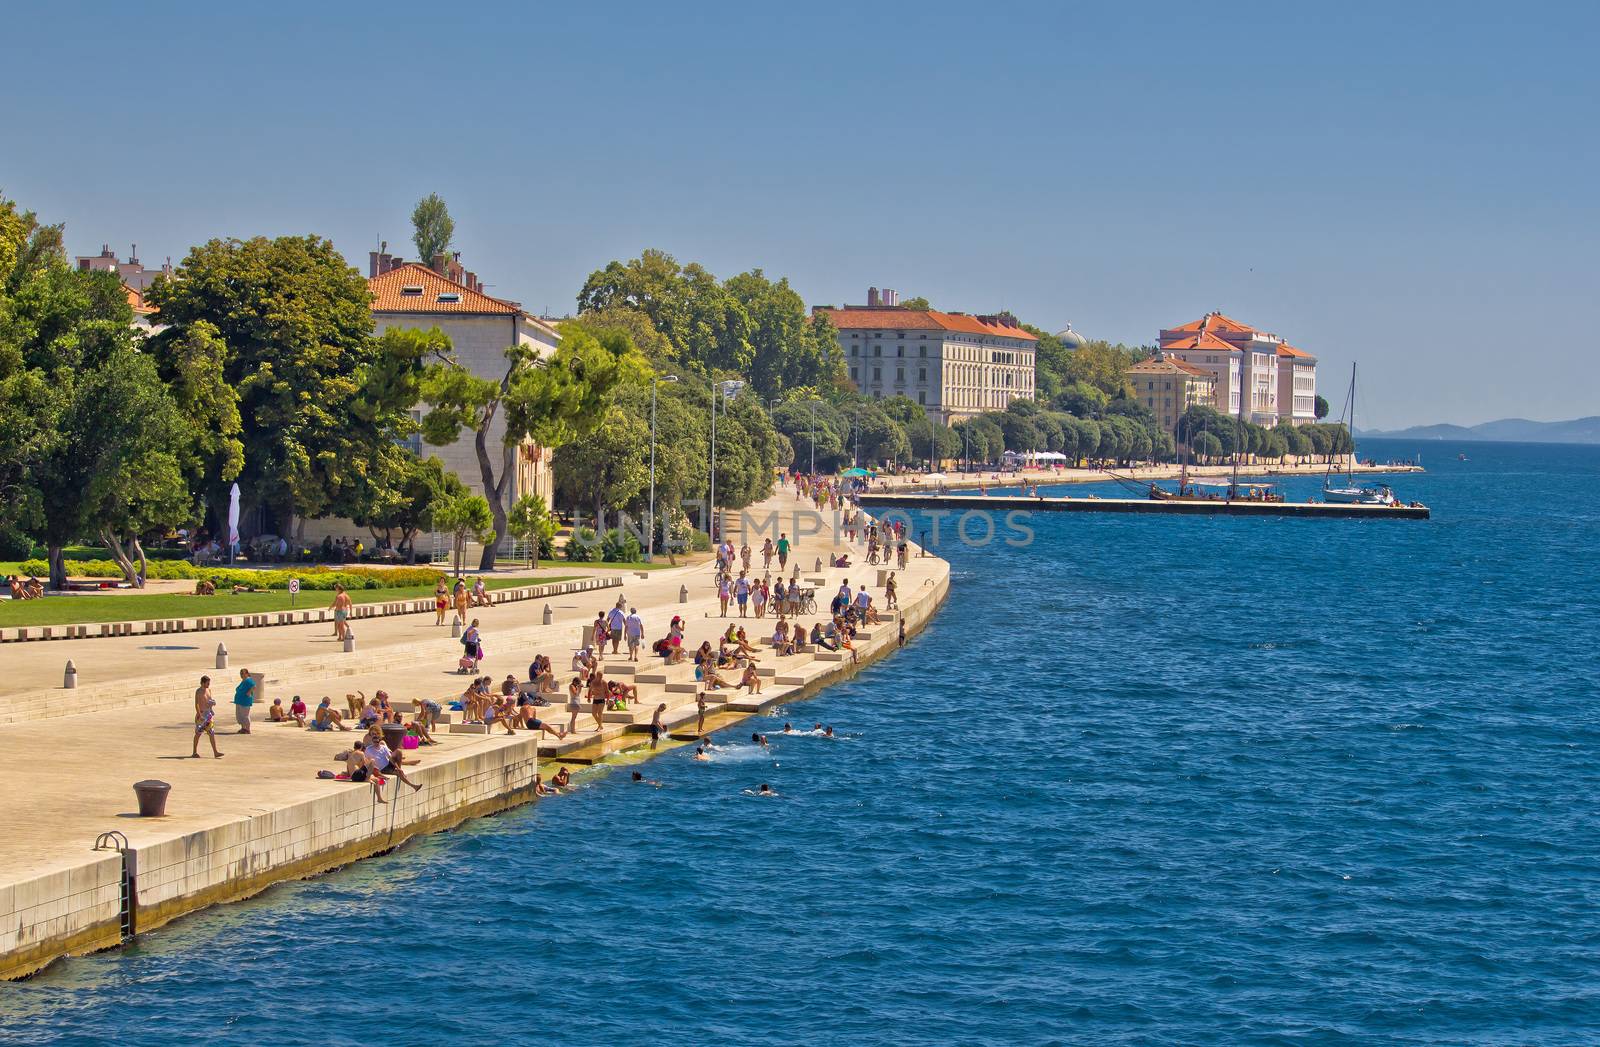 Zadar Riva waterfront view in Dalmatia, Croatia